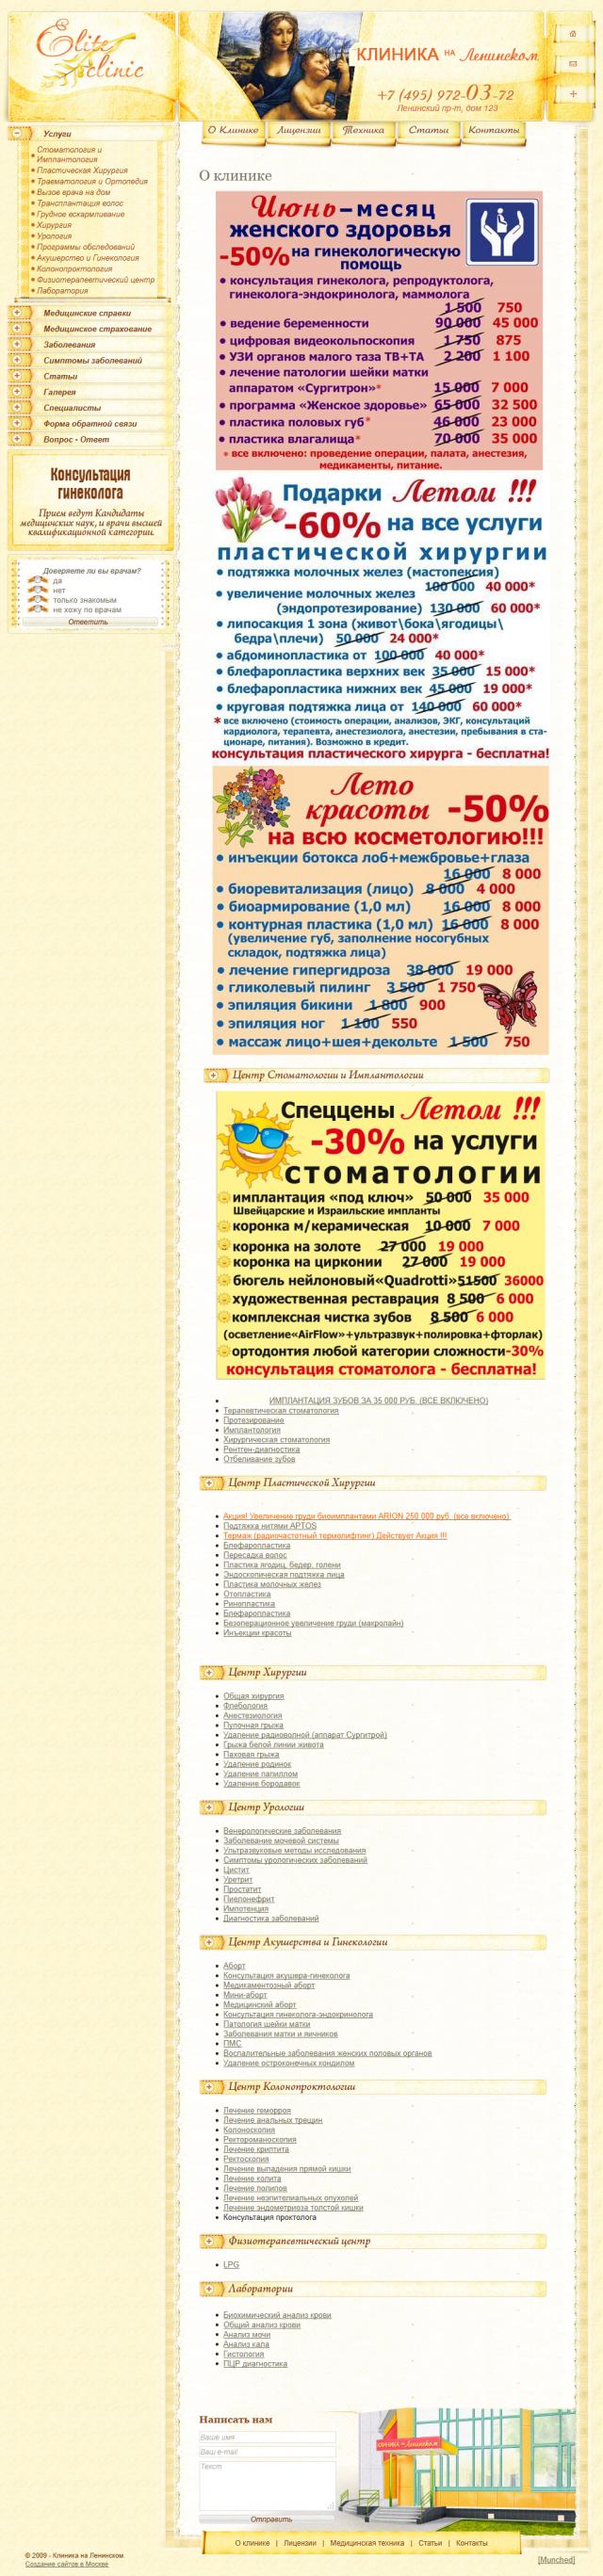 Сайт медицинского центра Клиника на Ленинском 131